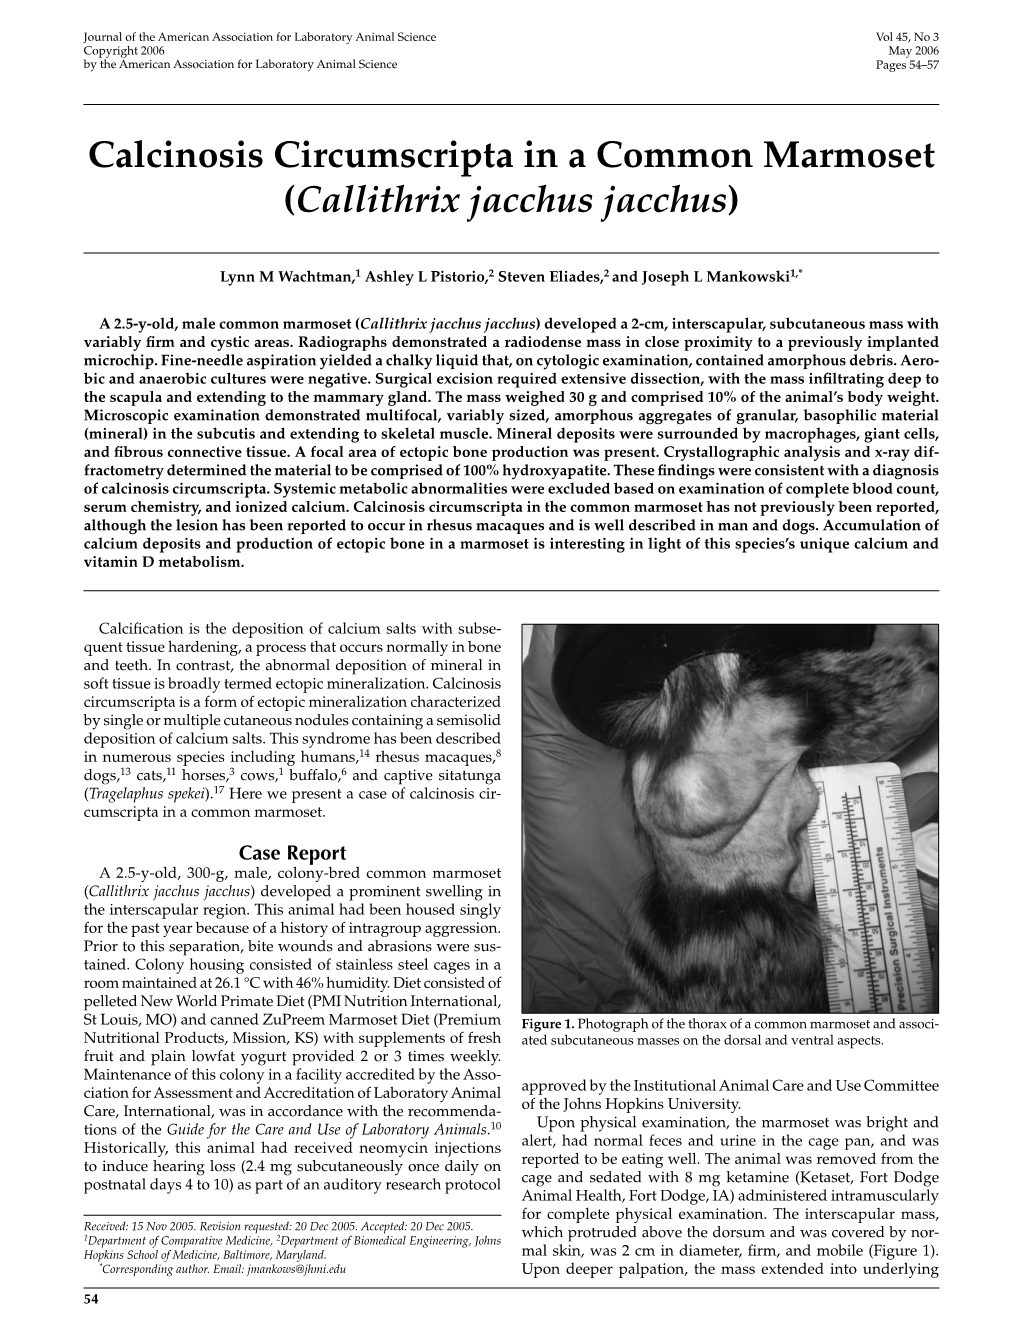 Calcinosis Circumscripta in a Common Marmoset (Callithrix Jacchus Jacchus)